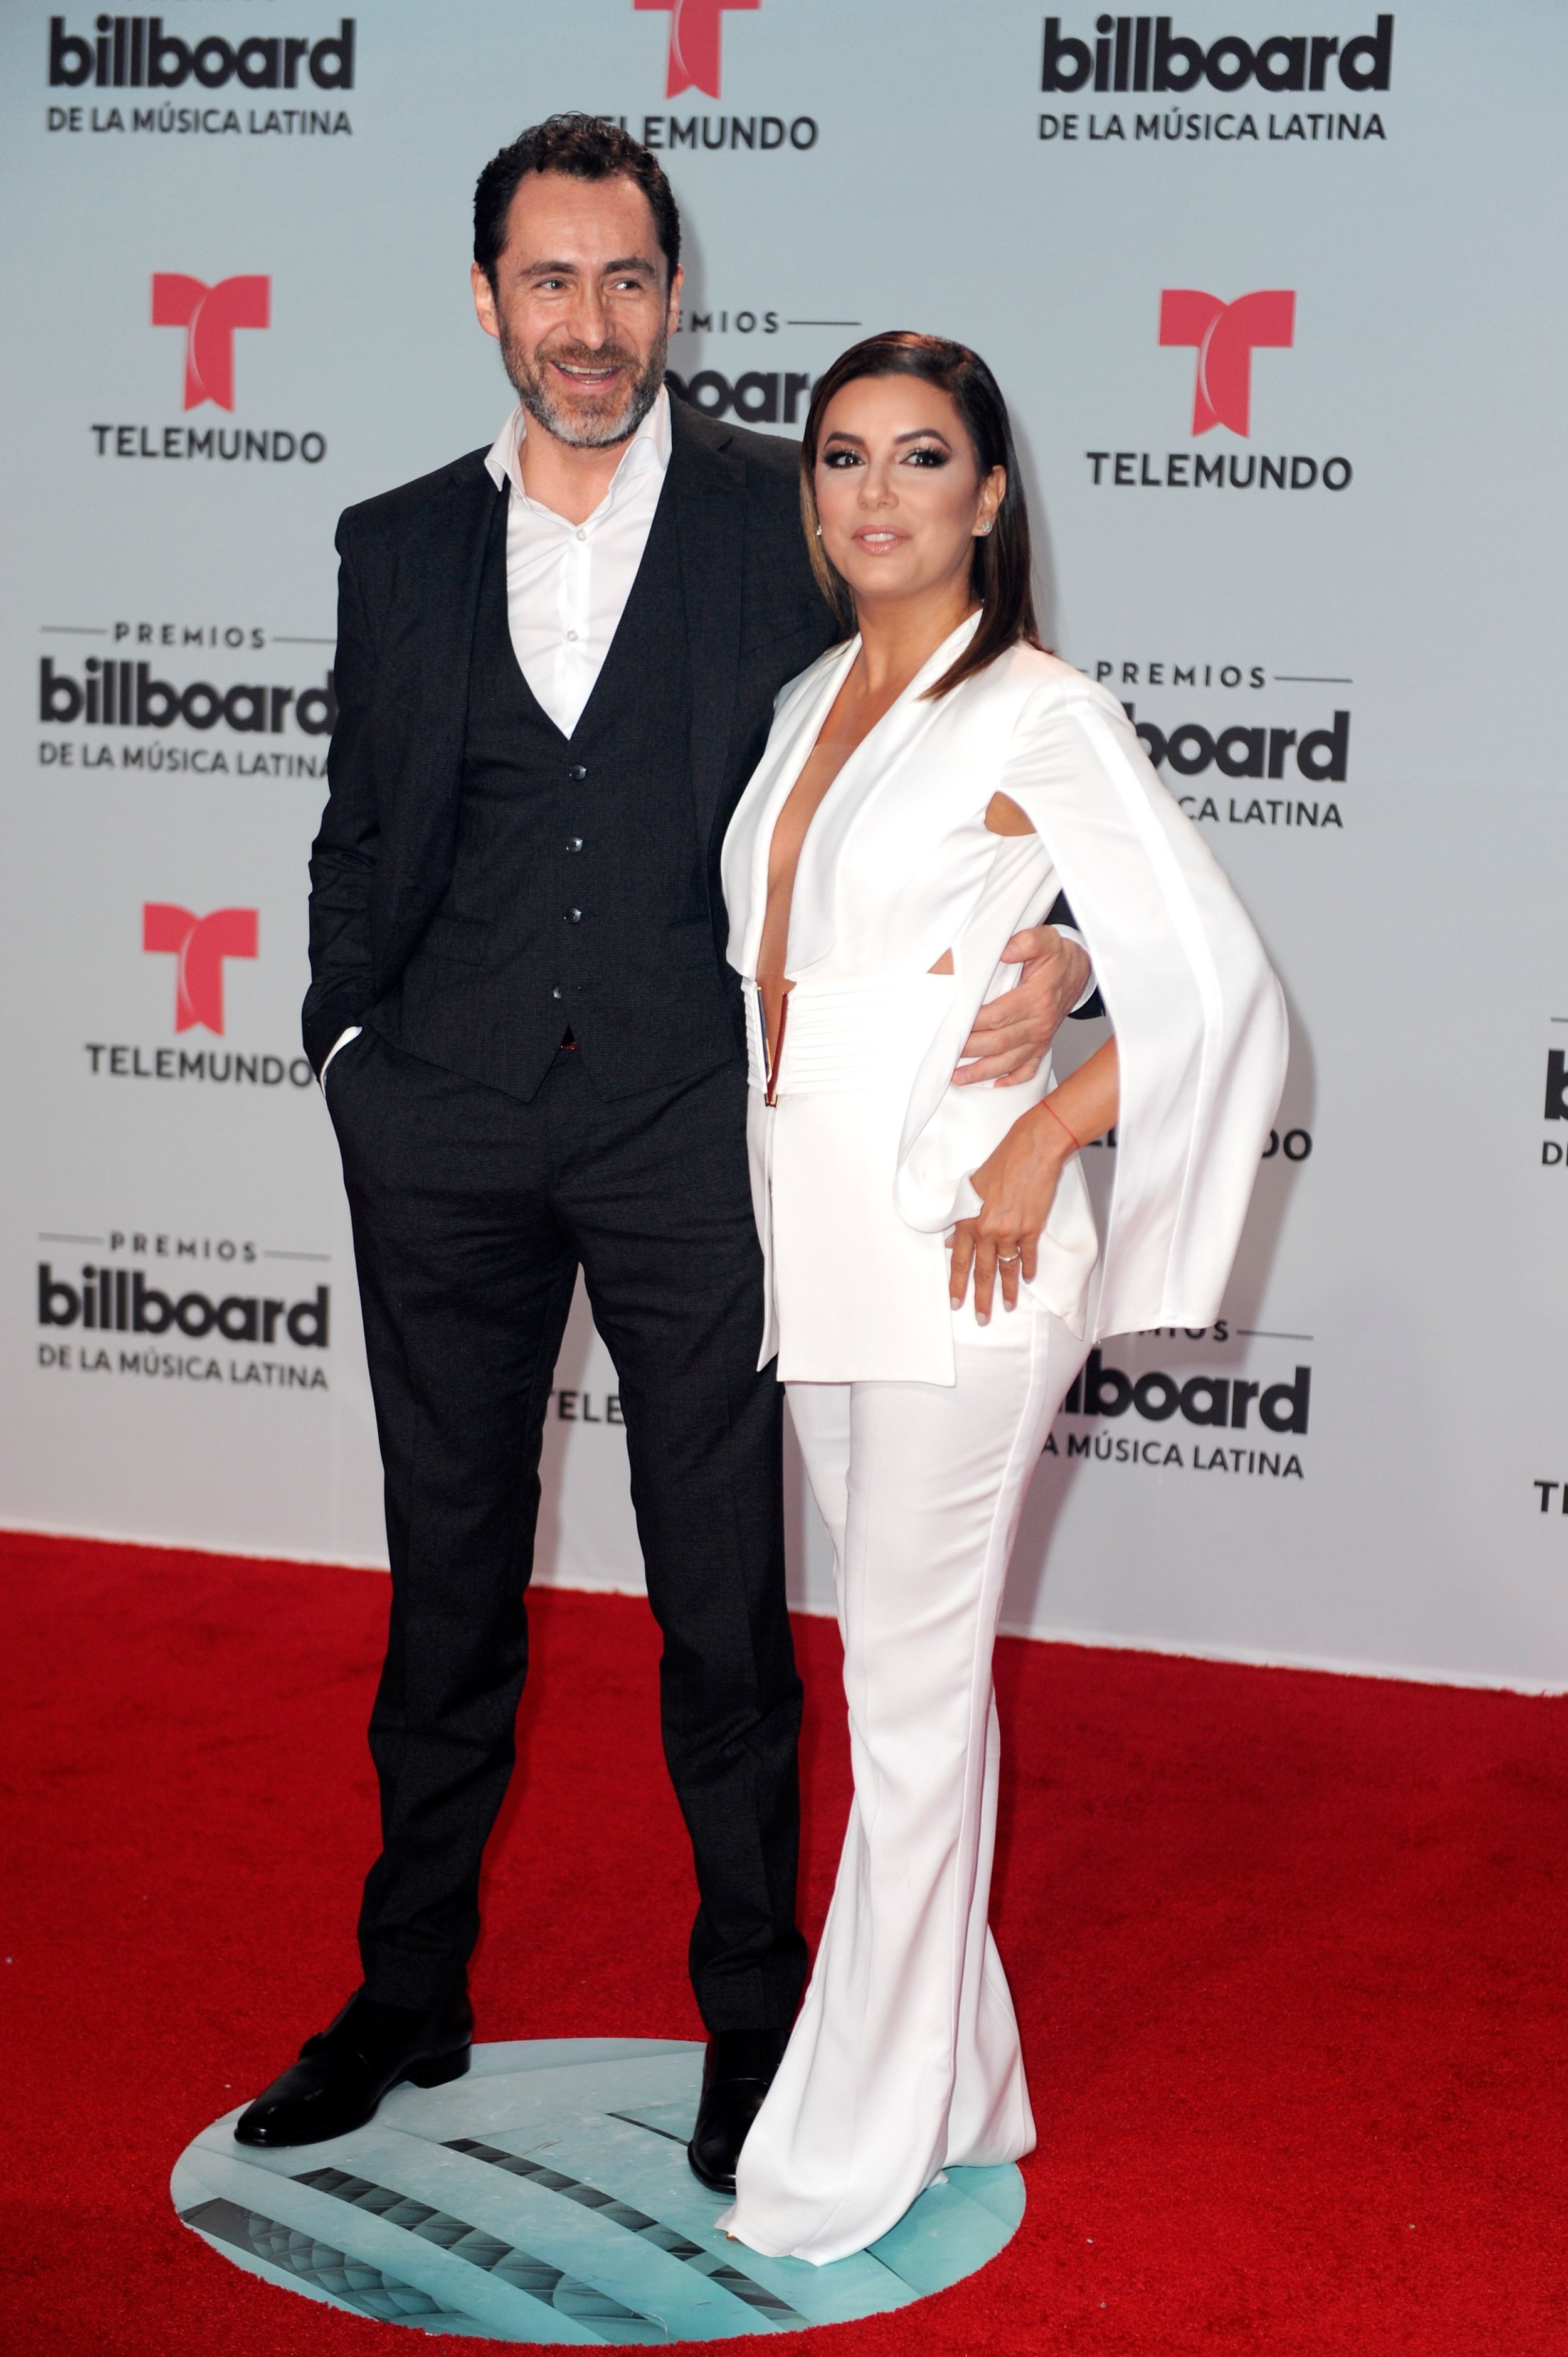 Premios Billboard 2017 Red Carpet Photos Eva Longoria, Demian Bichir